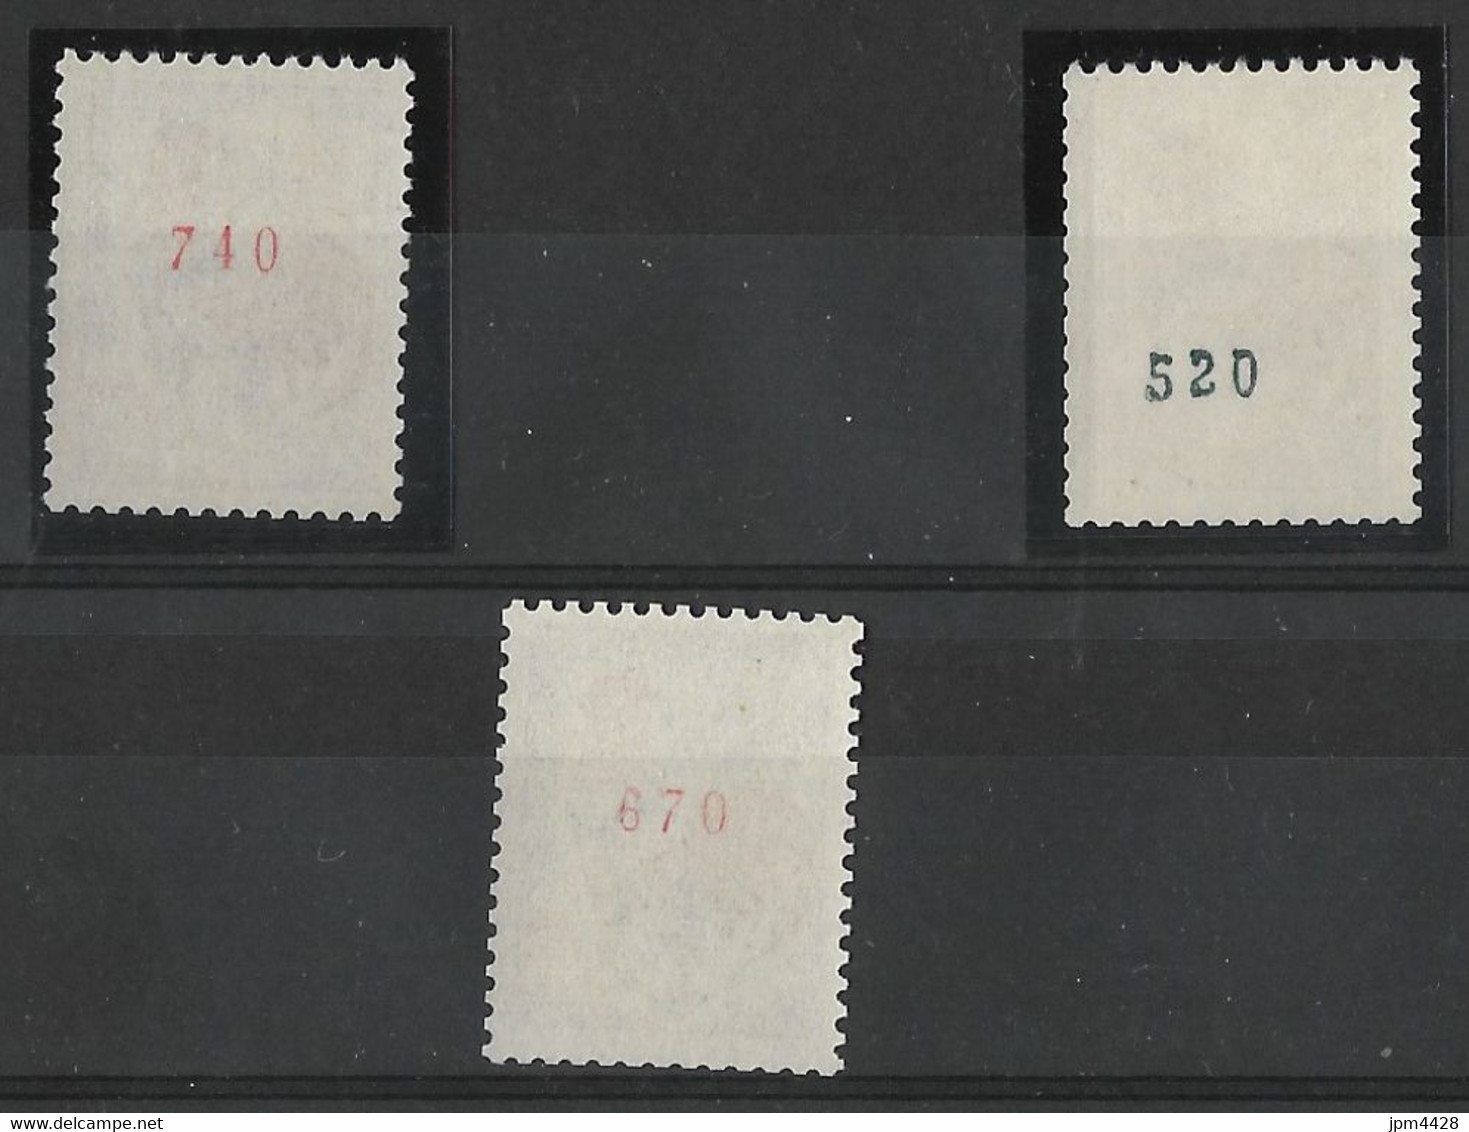 France N° 1331b N° Rouge, 1331c N° Vert, Et 1331 Ab N° Rouge Roulette  Coq De Decaris Neuf** - Coil Stamps